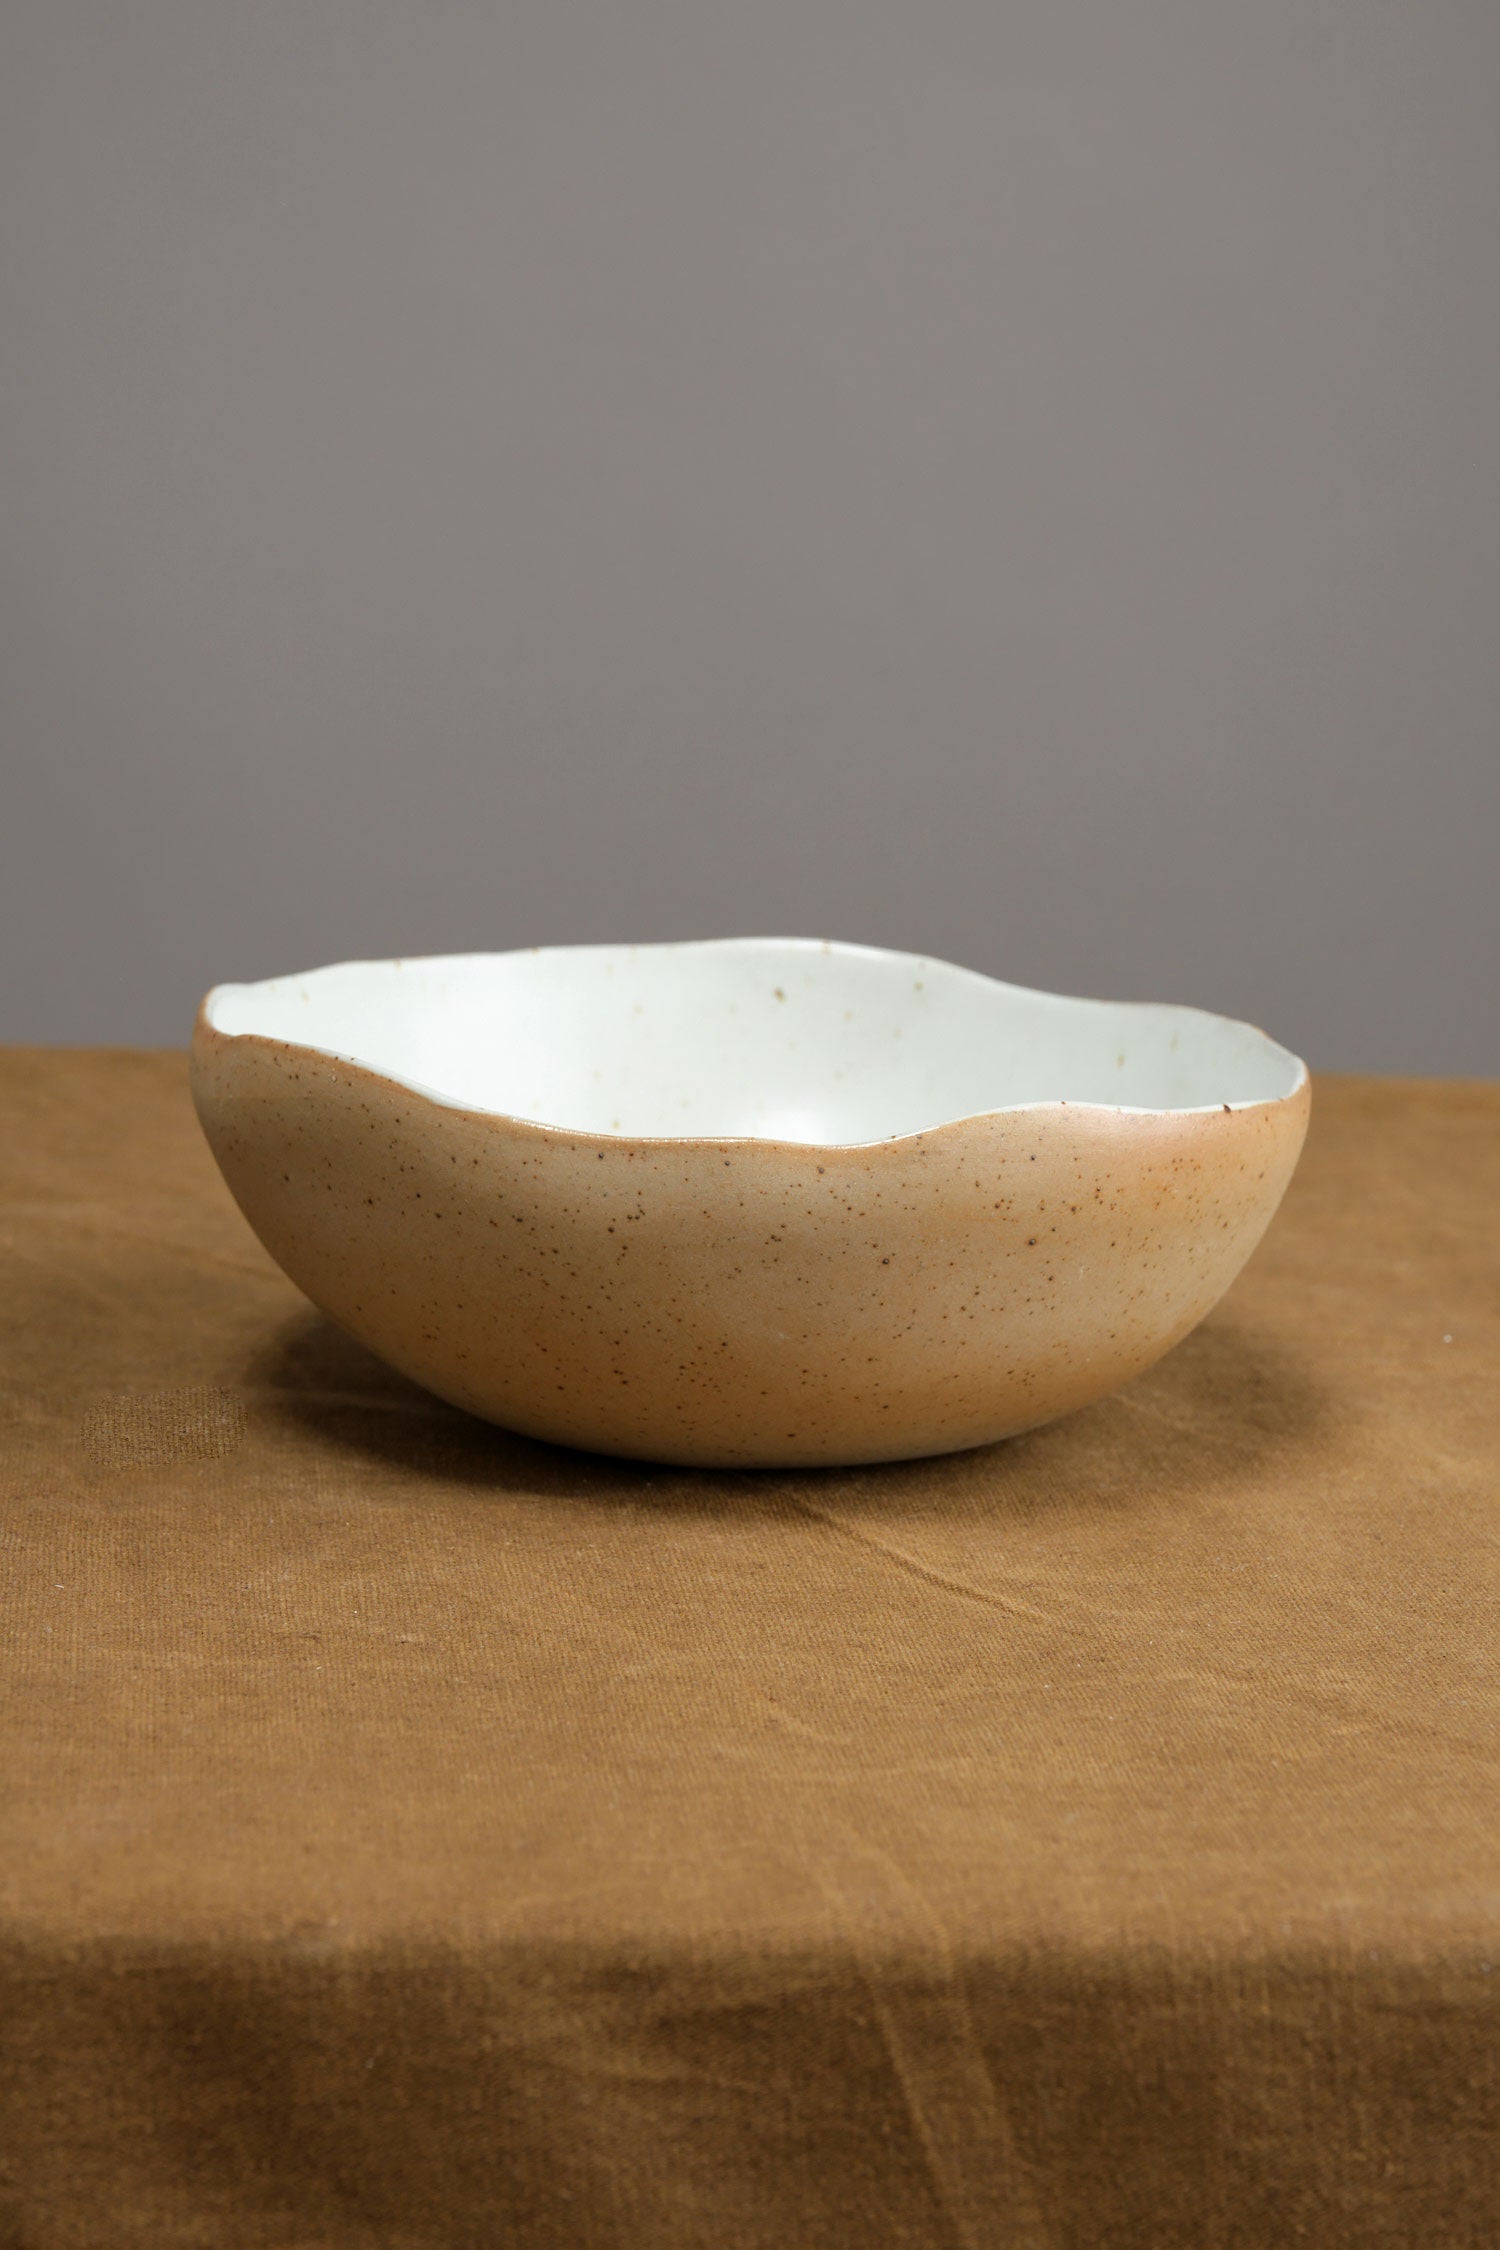 Carved Eggshell Morning Bowl in Naked White Mt Washington Pottery